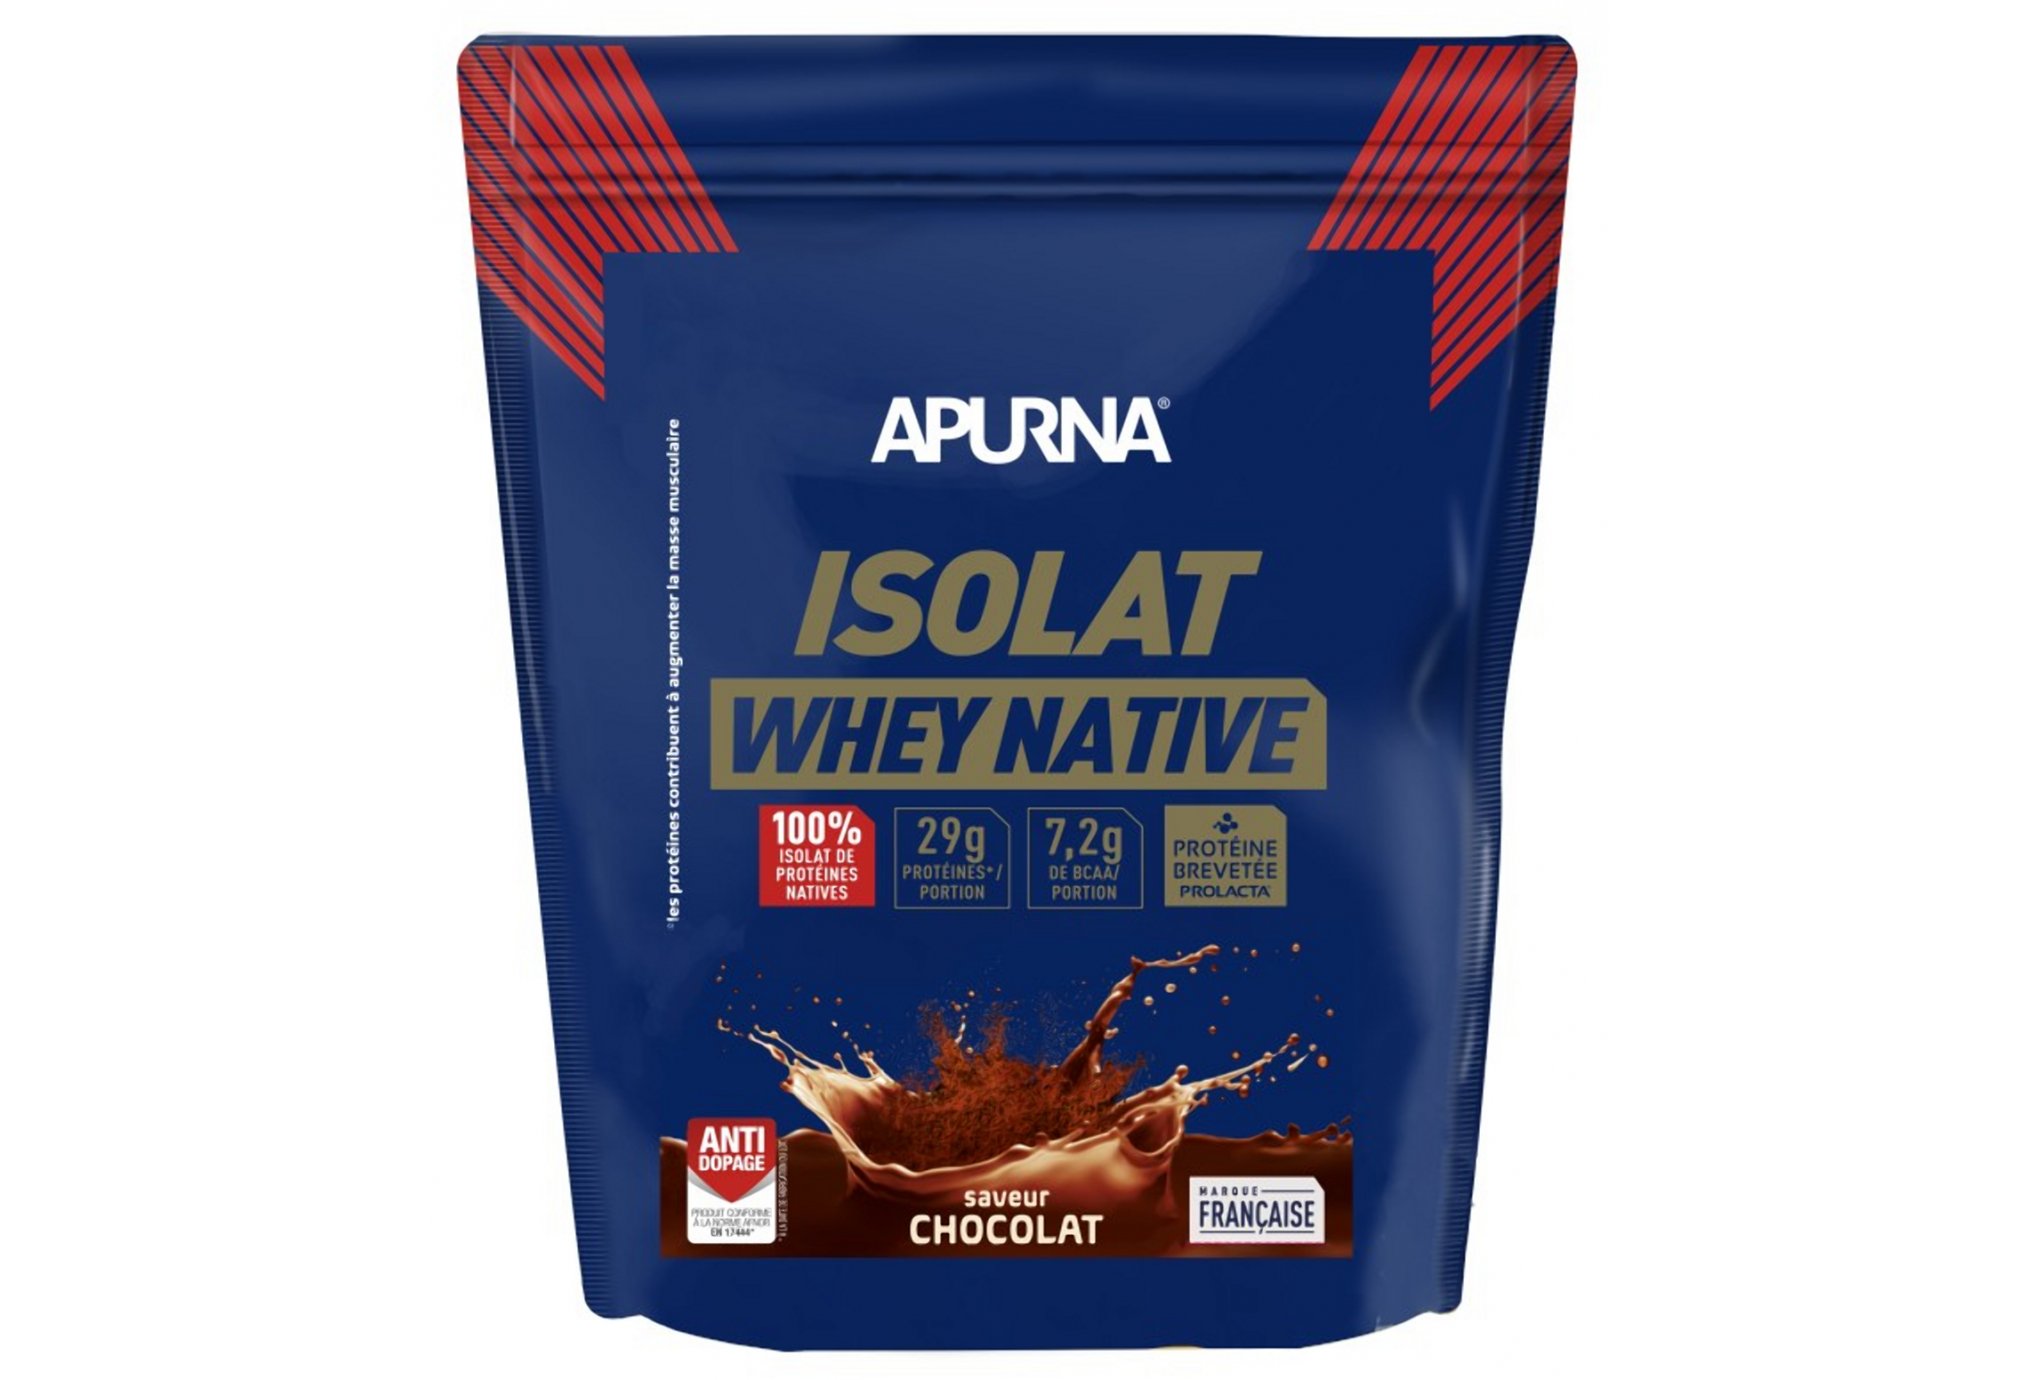 Apurna Isolat Whey Native 720 g - Chocolat Diététique Protéines / récupération